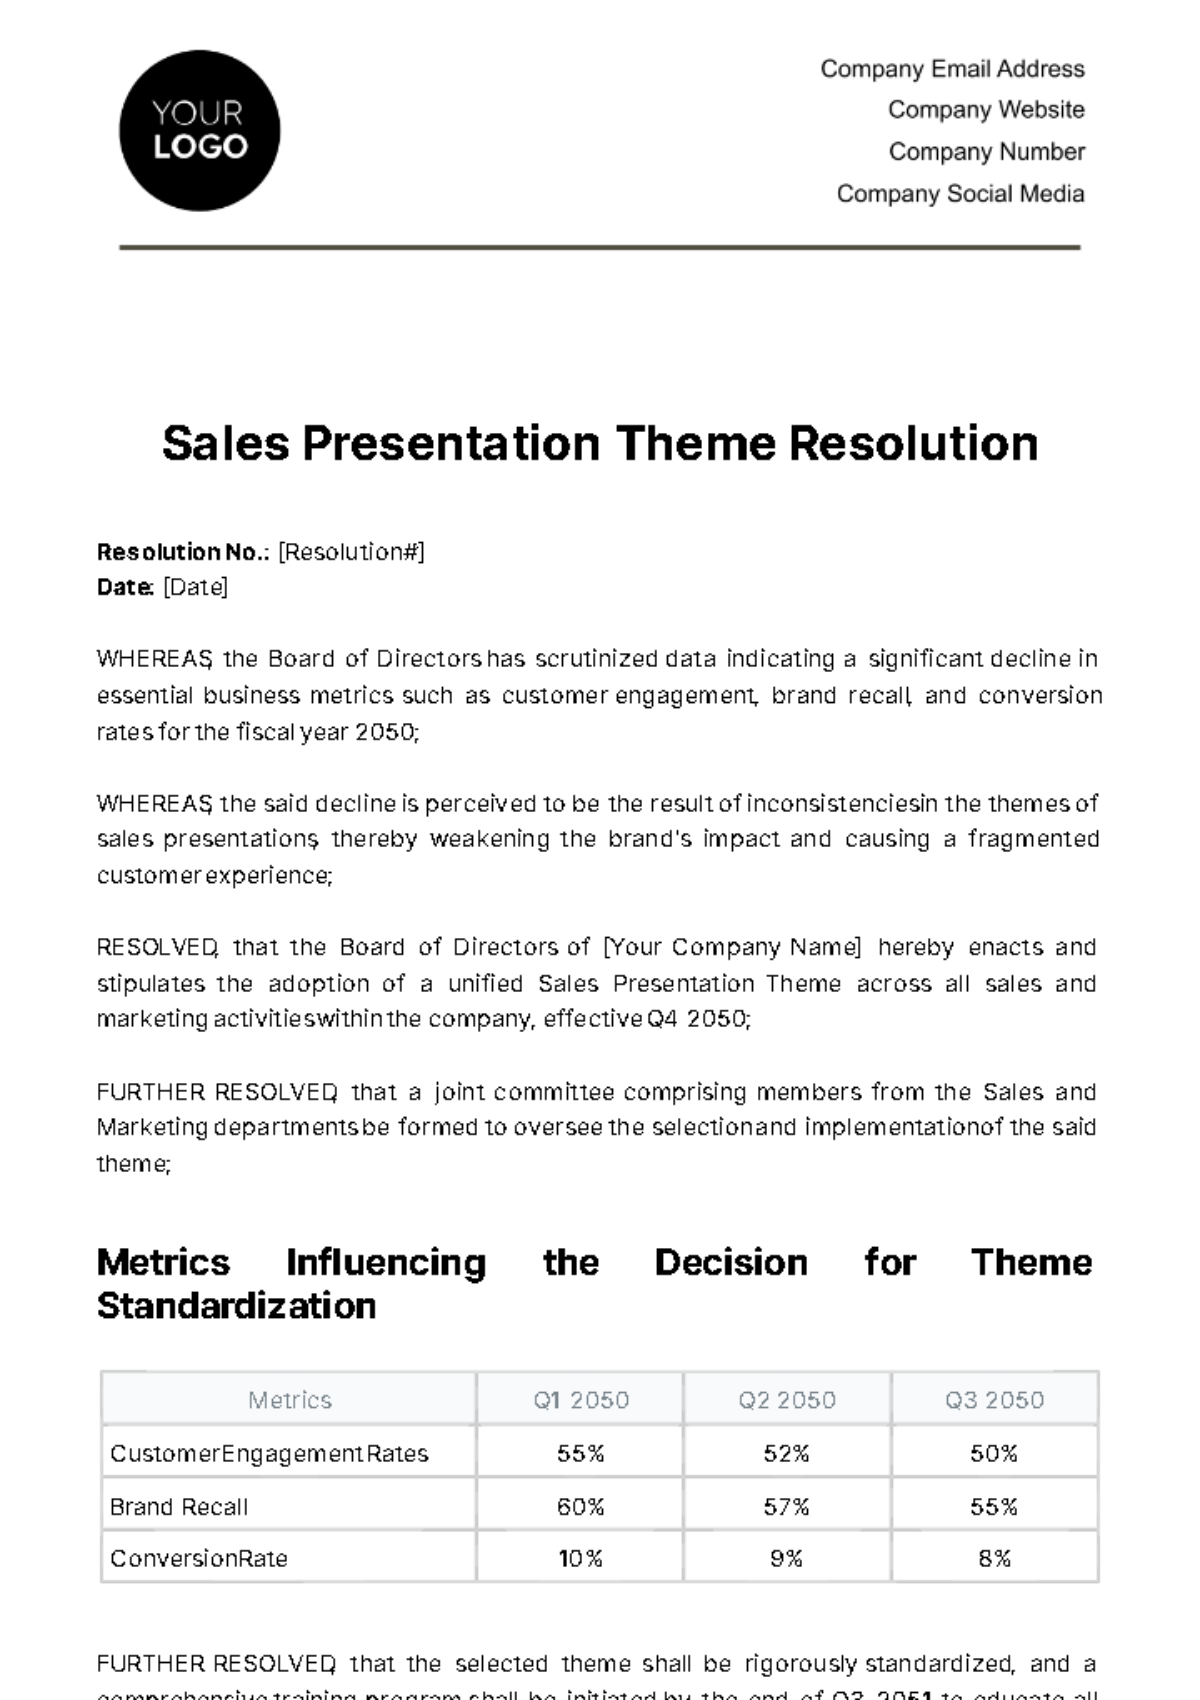 Free Sales Presentation Theme Resolution Template